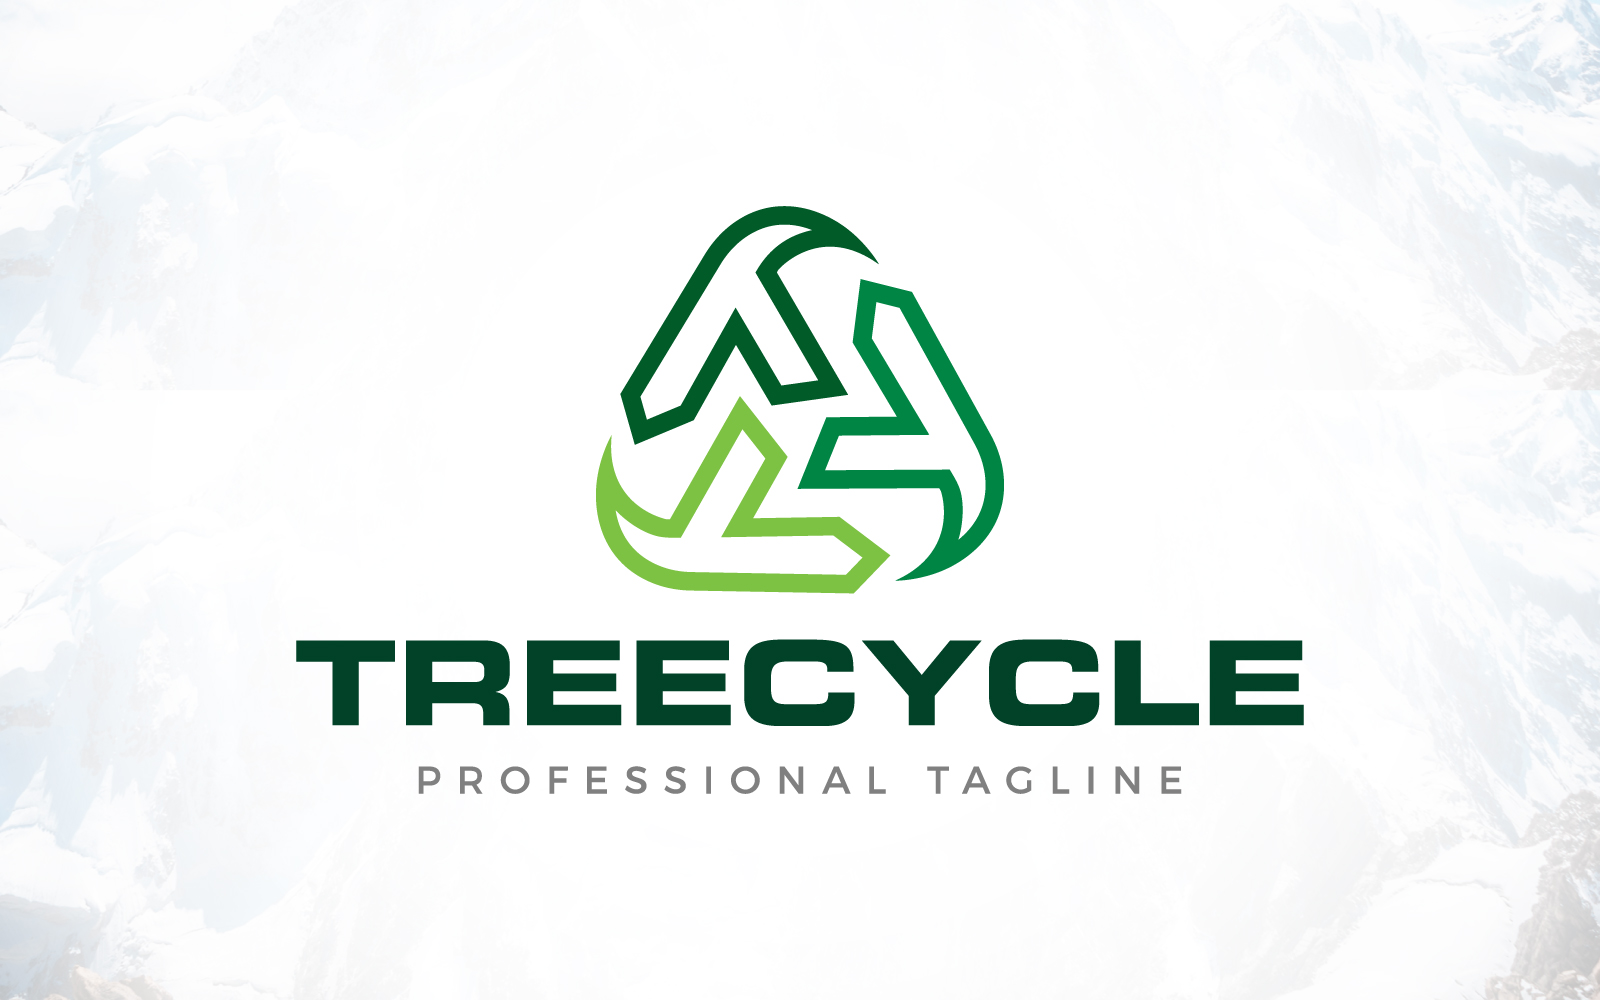 cycle logo illustration ai free download free road cycle logo - Urbanbrush